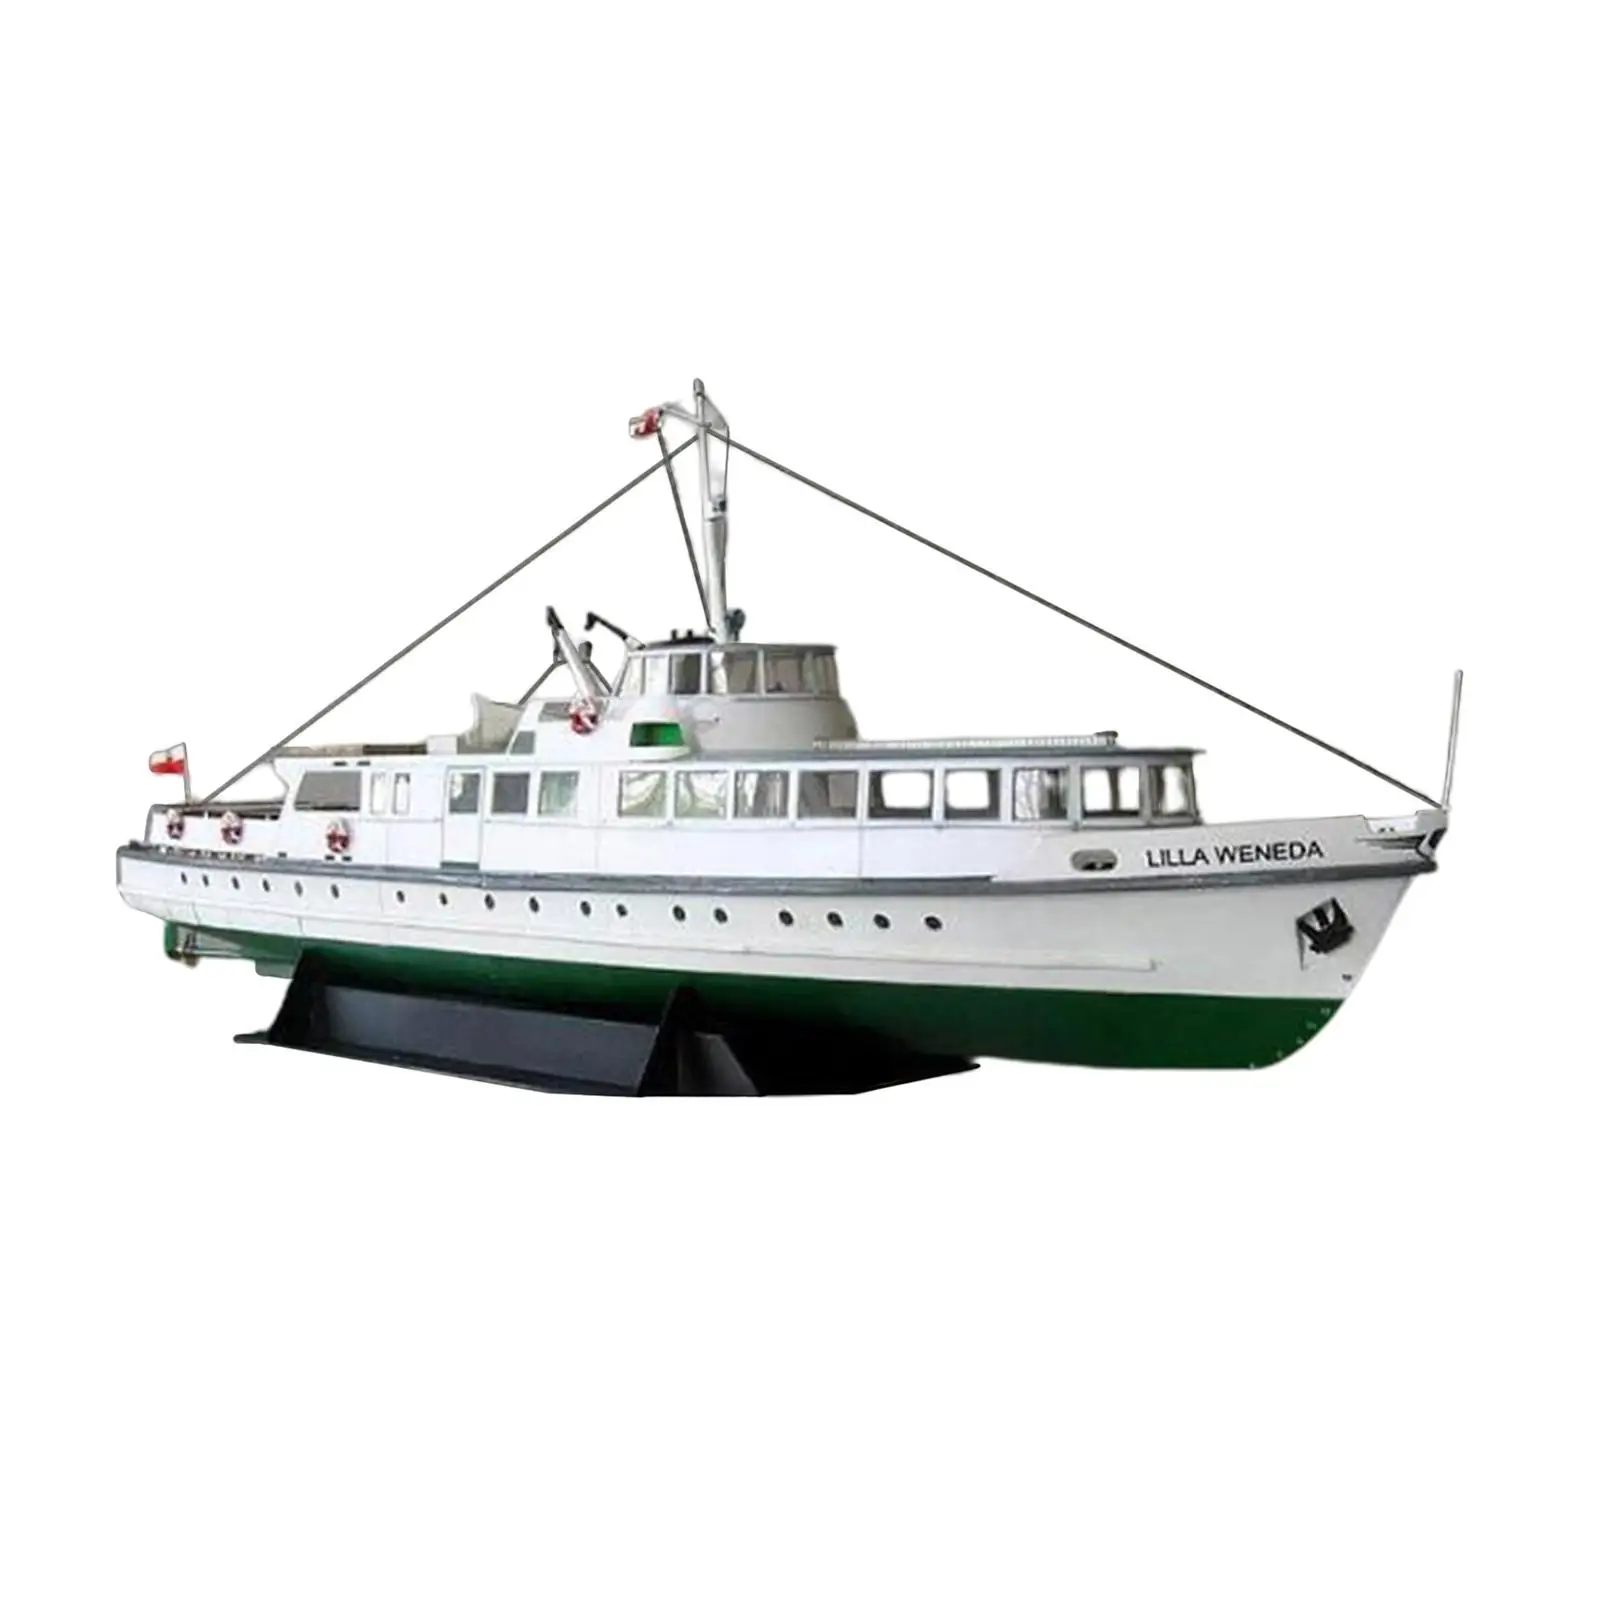 3D Coastal Ferry Boat Template Kit 1/100 Lilla WENEDA Educational Game